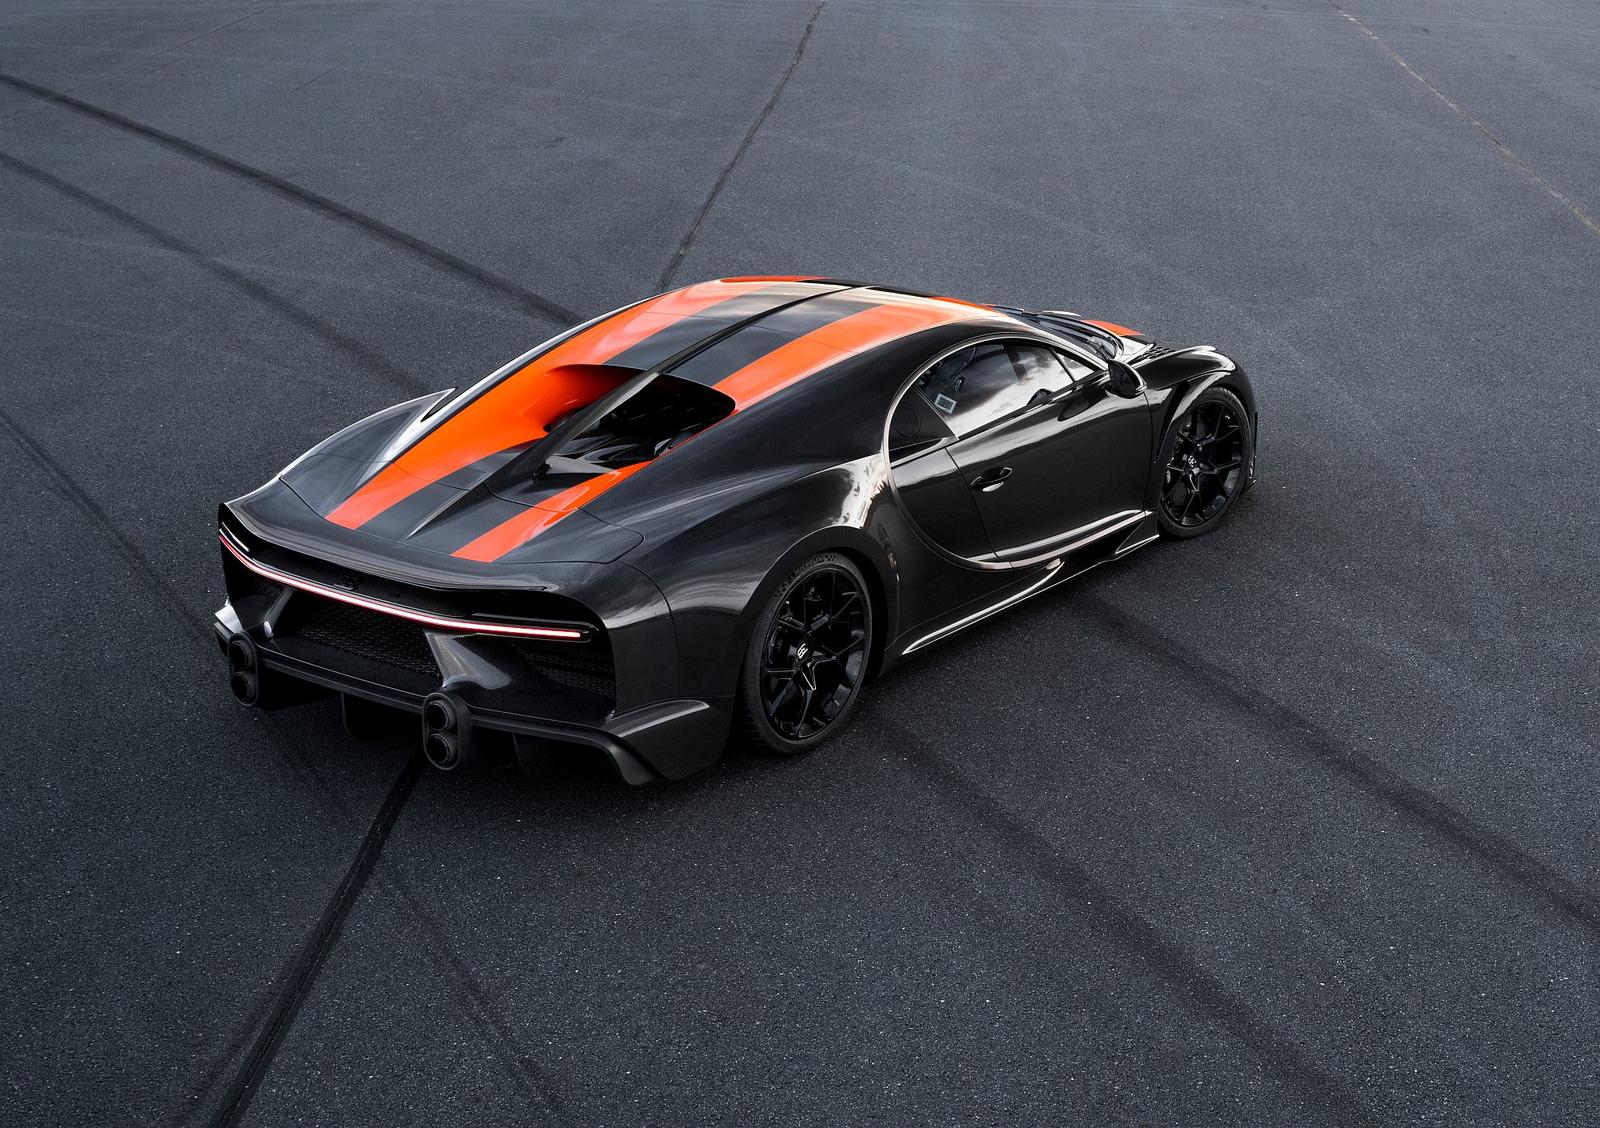 Bugatti Chiron 300 mph_2019 (10)